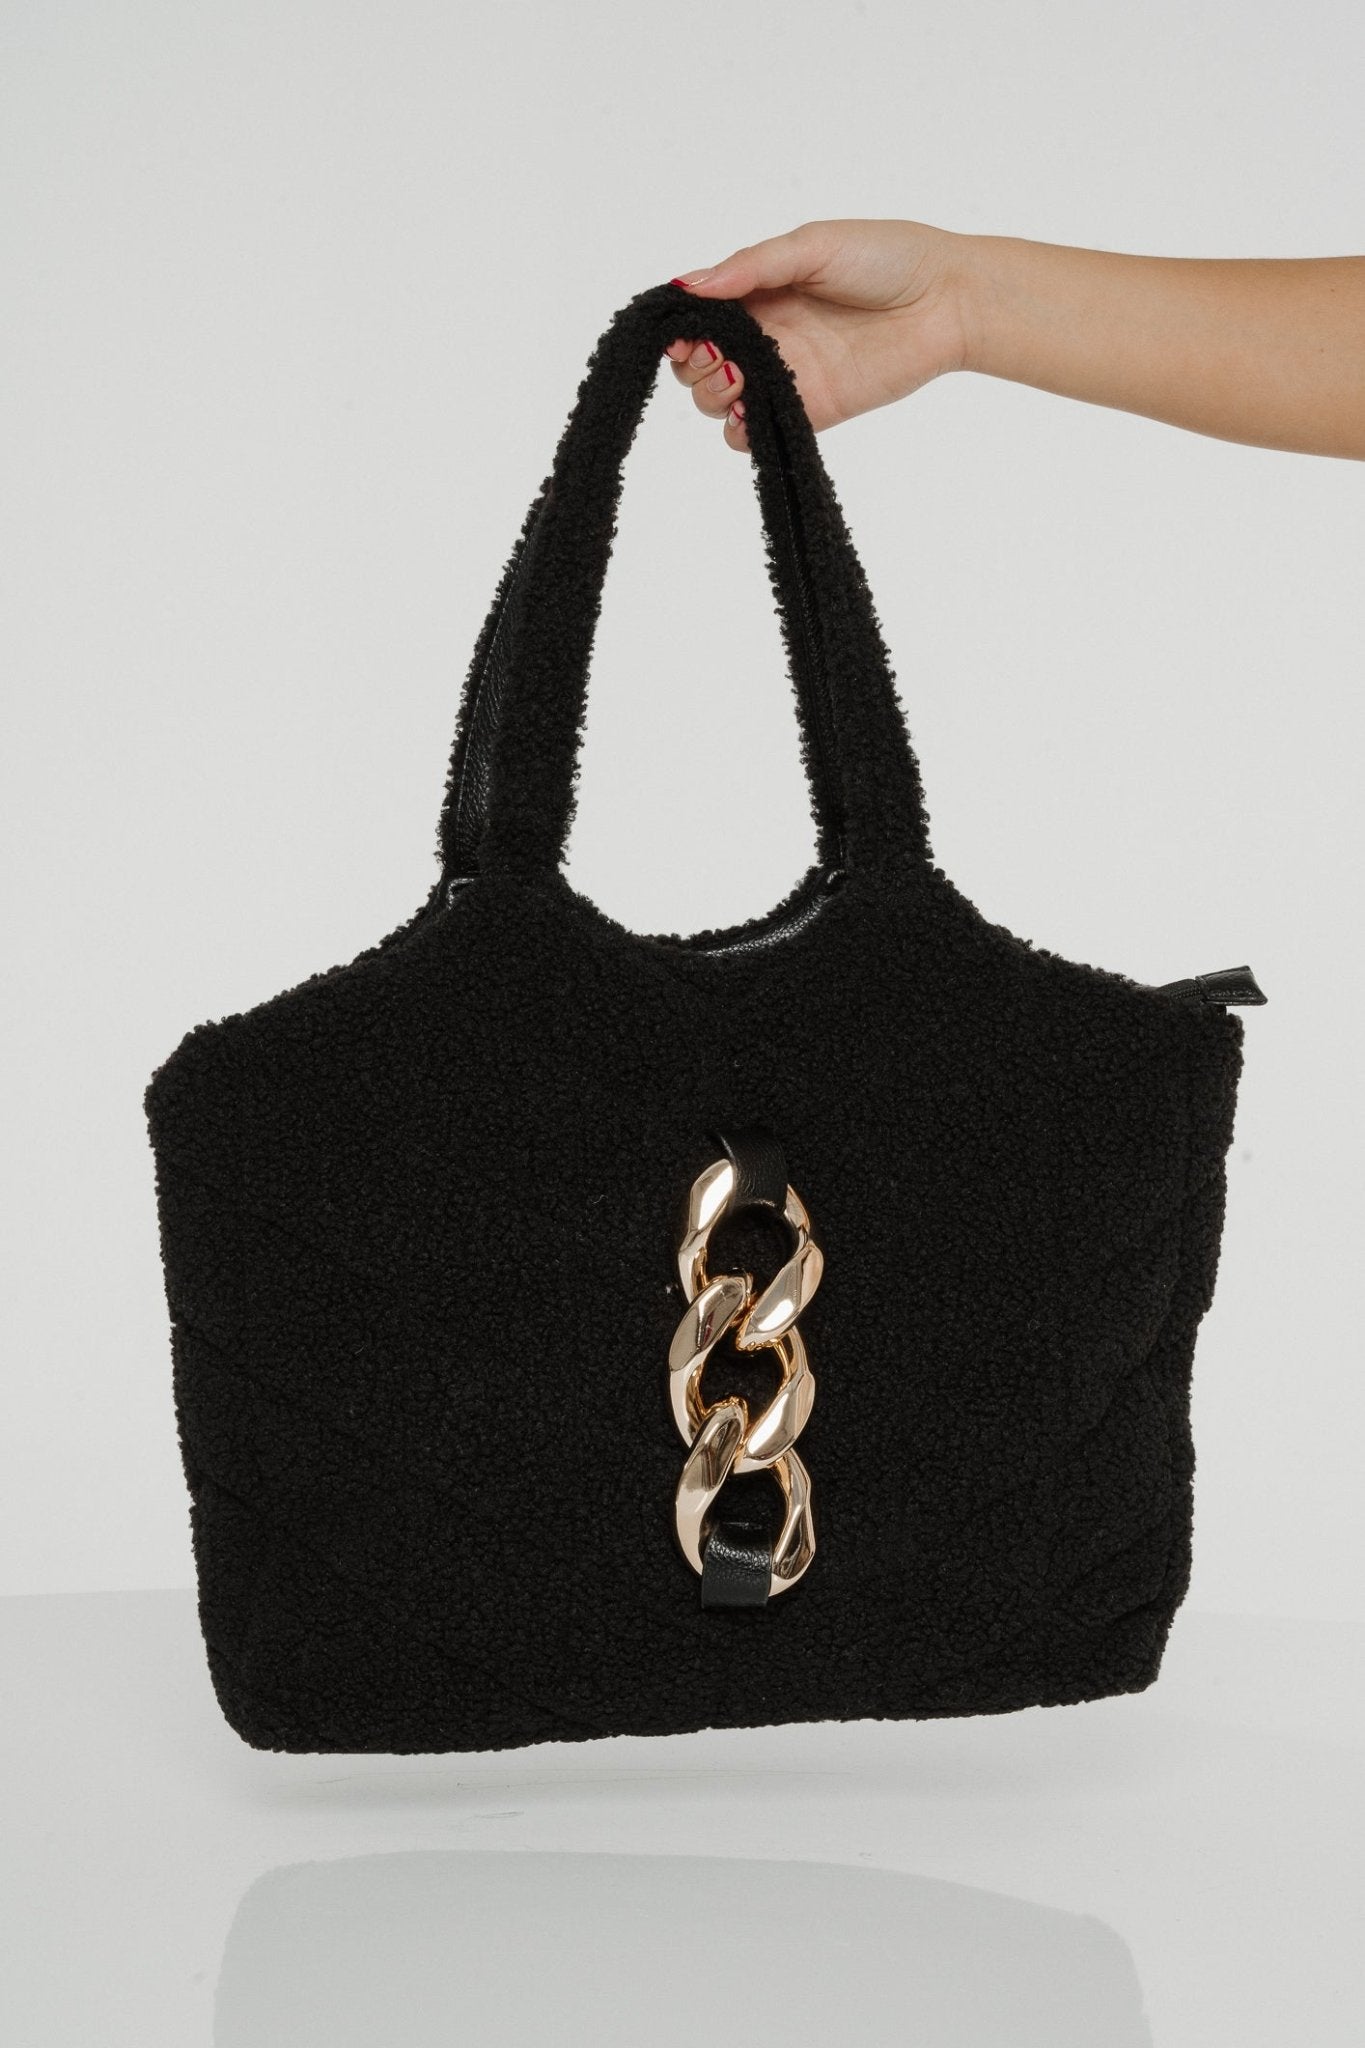 Beth Gold Chain Shearling Tote Bag In Black - The Walk in Wardrobe